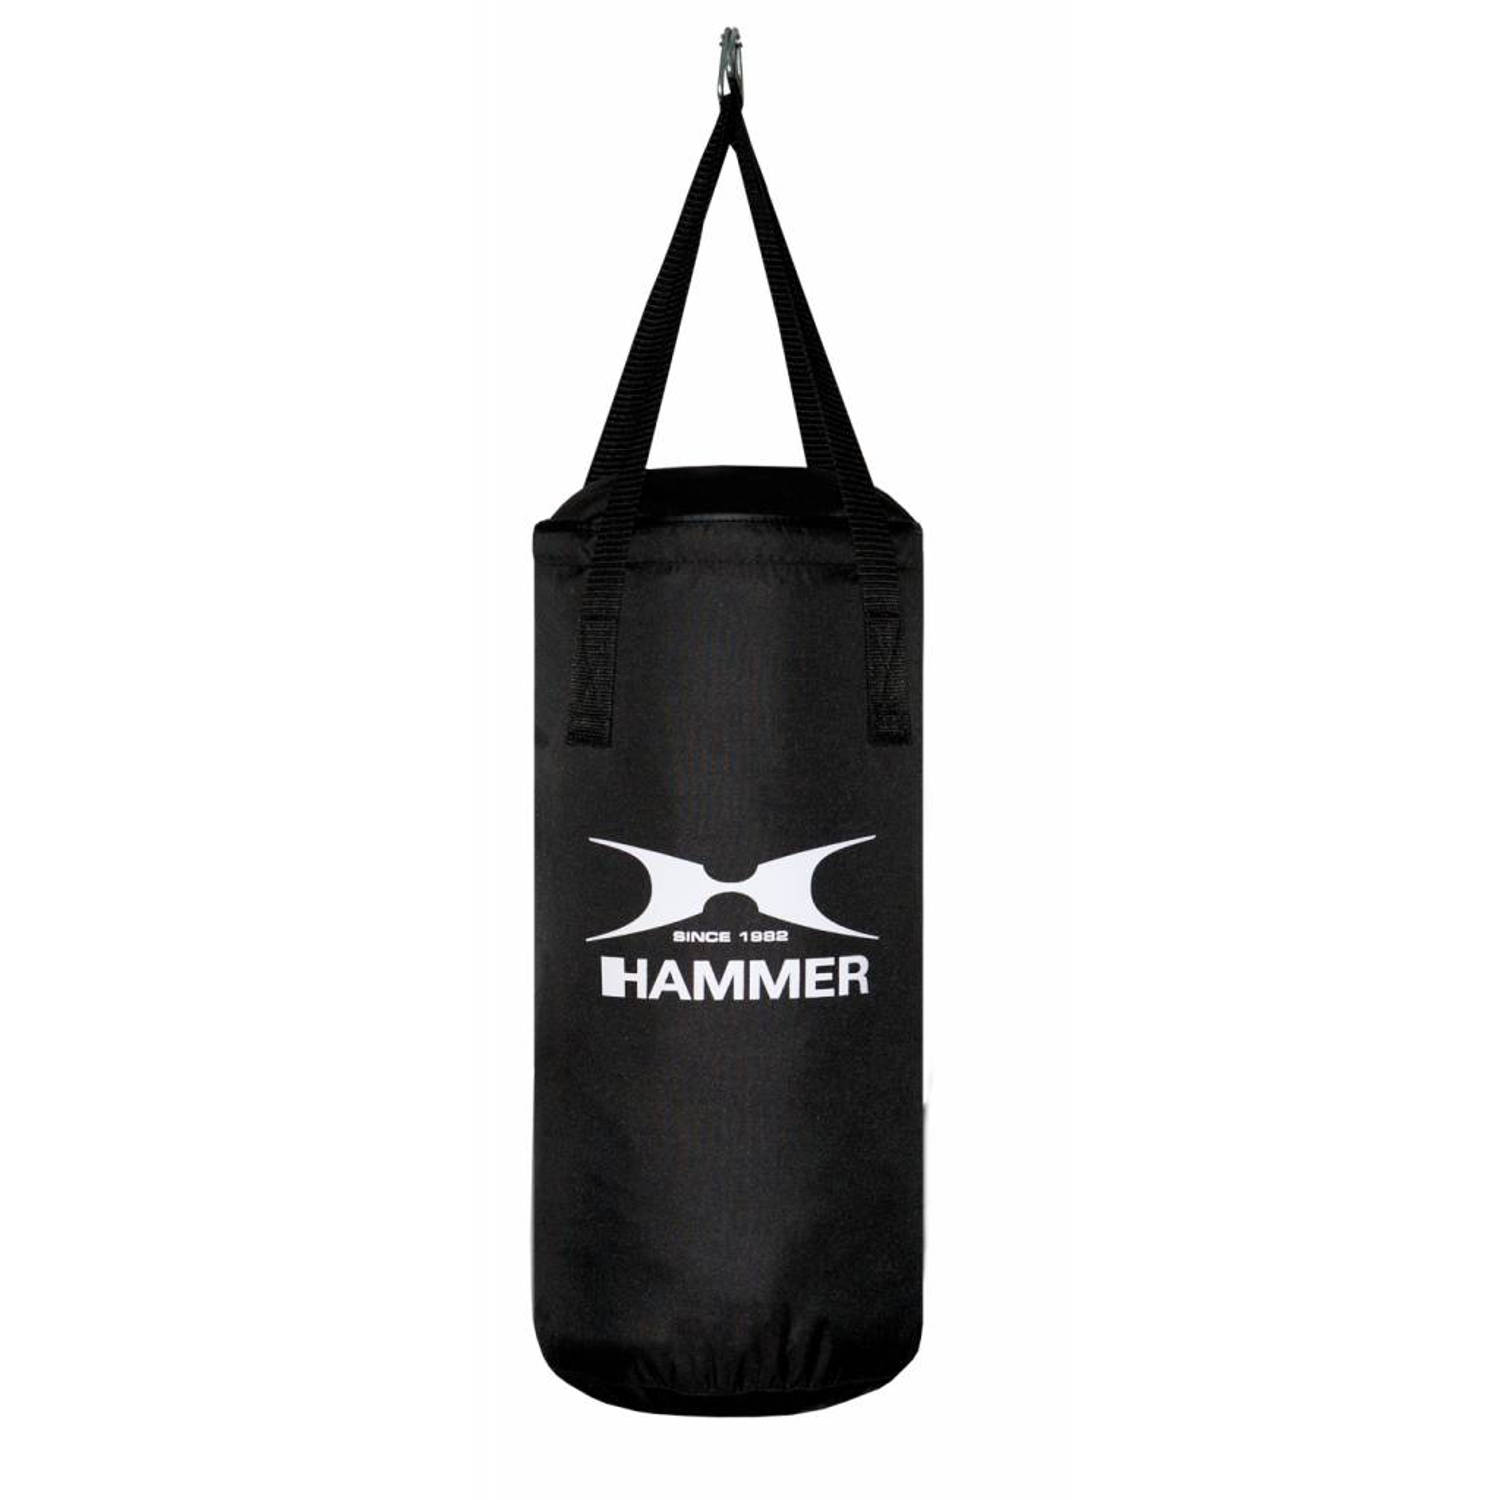 Hammer Boxing Bokszak Fit Junior, Zwart, 50 x 25cm - Nylon